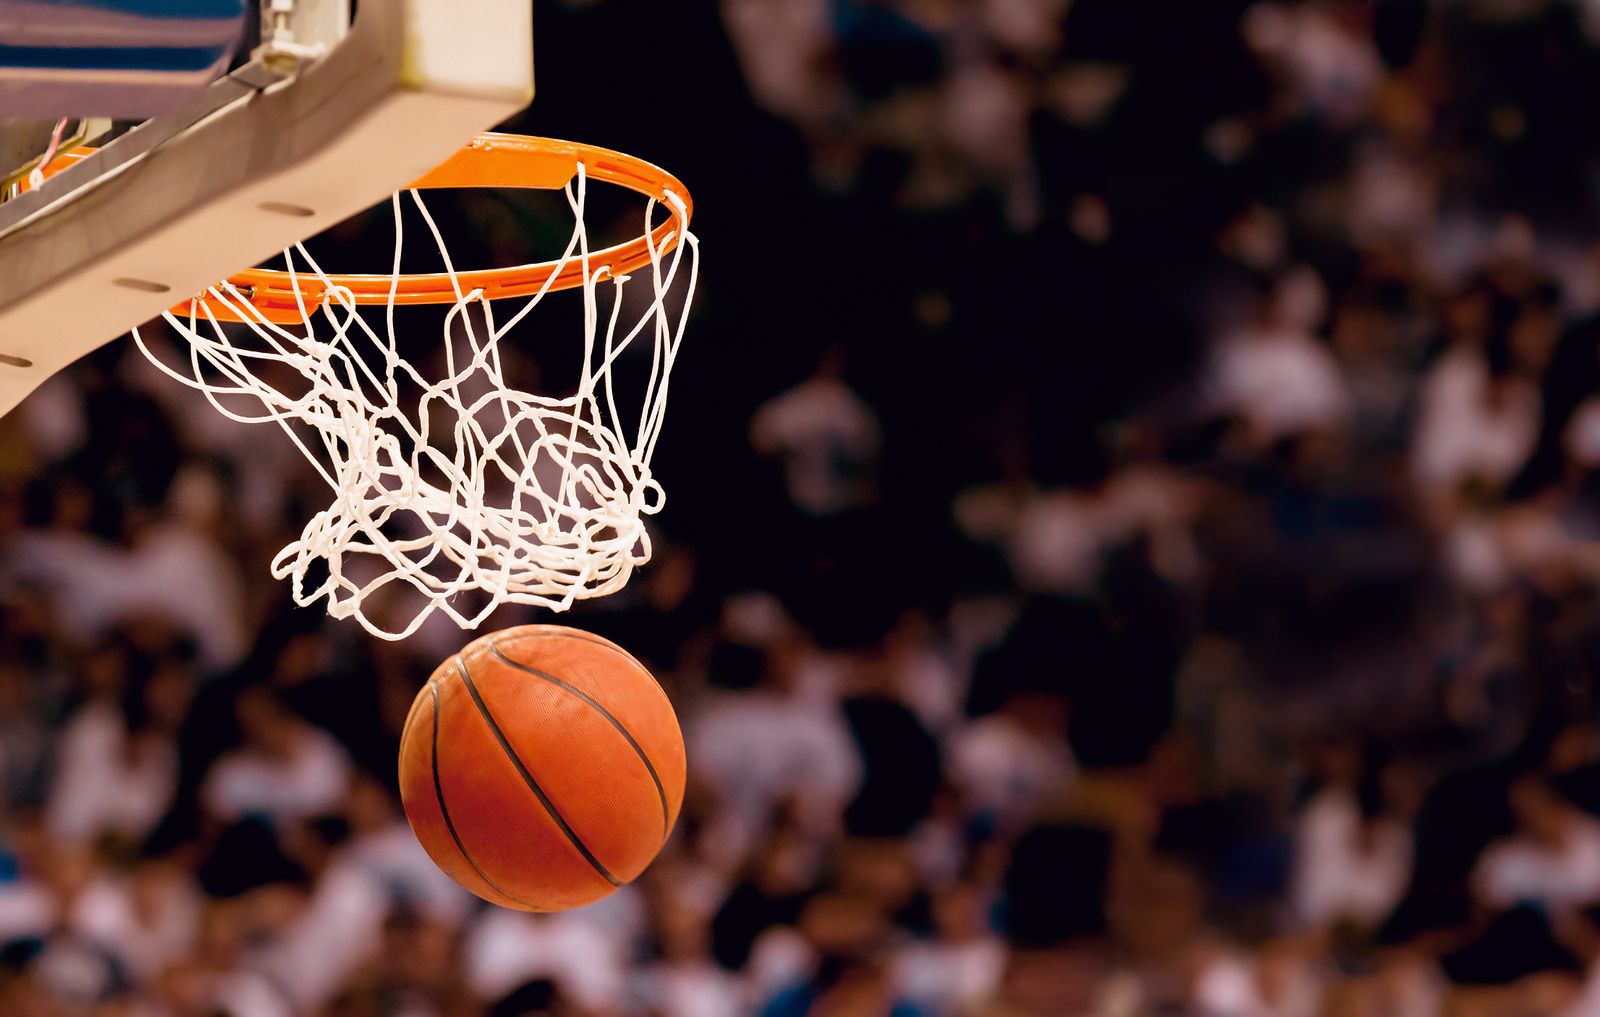 Basketball through a hoop